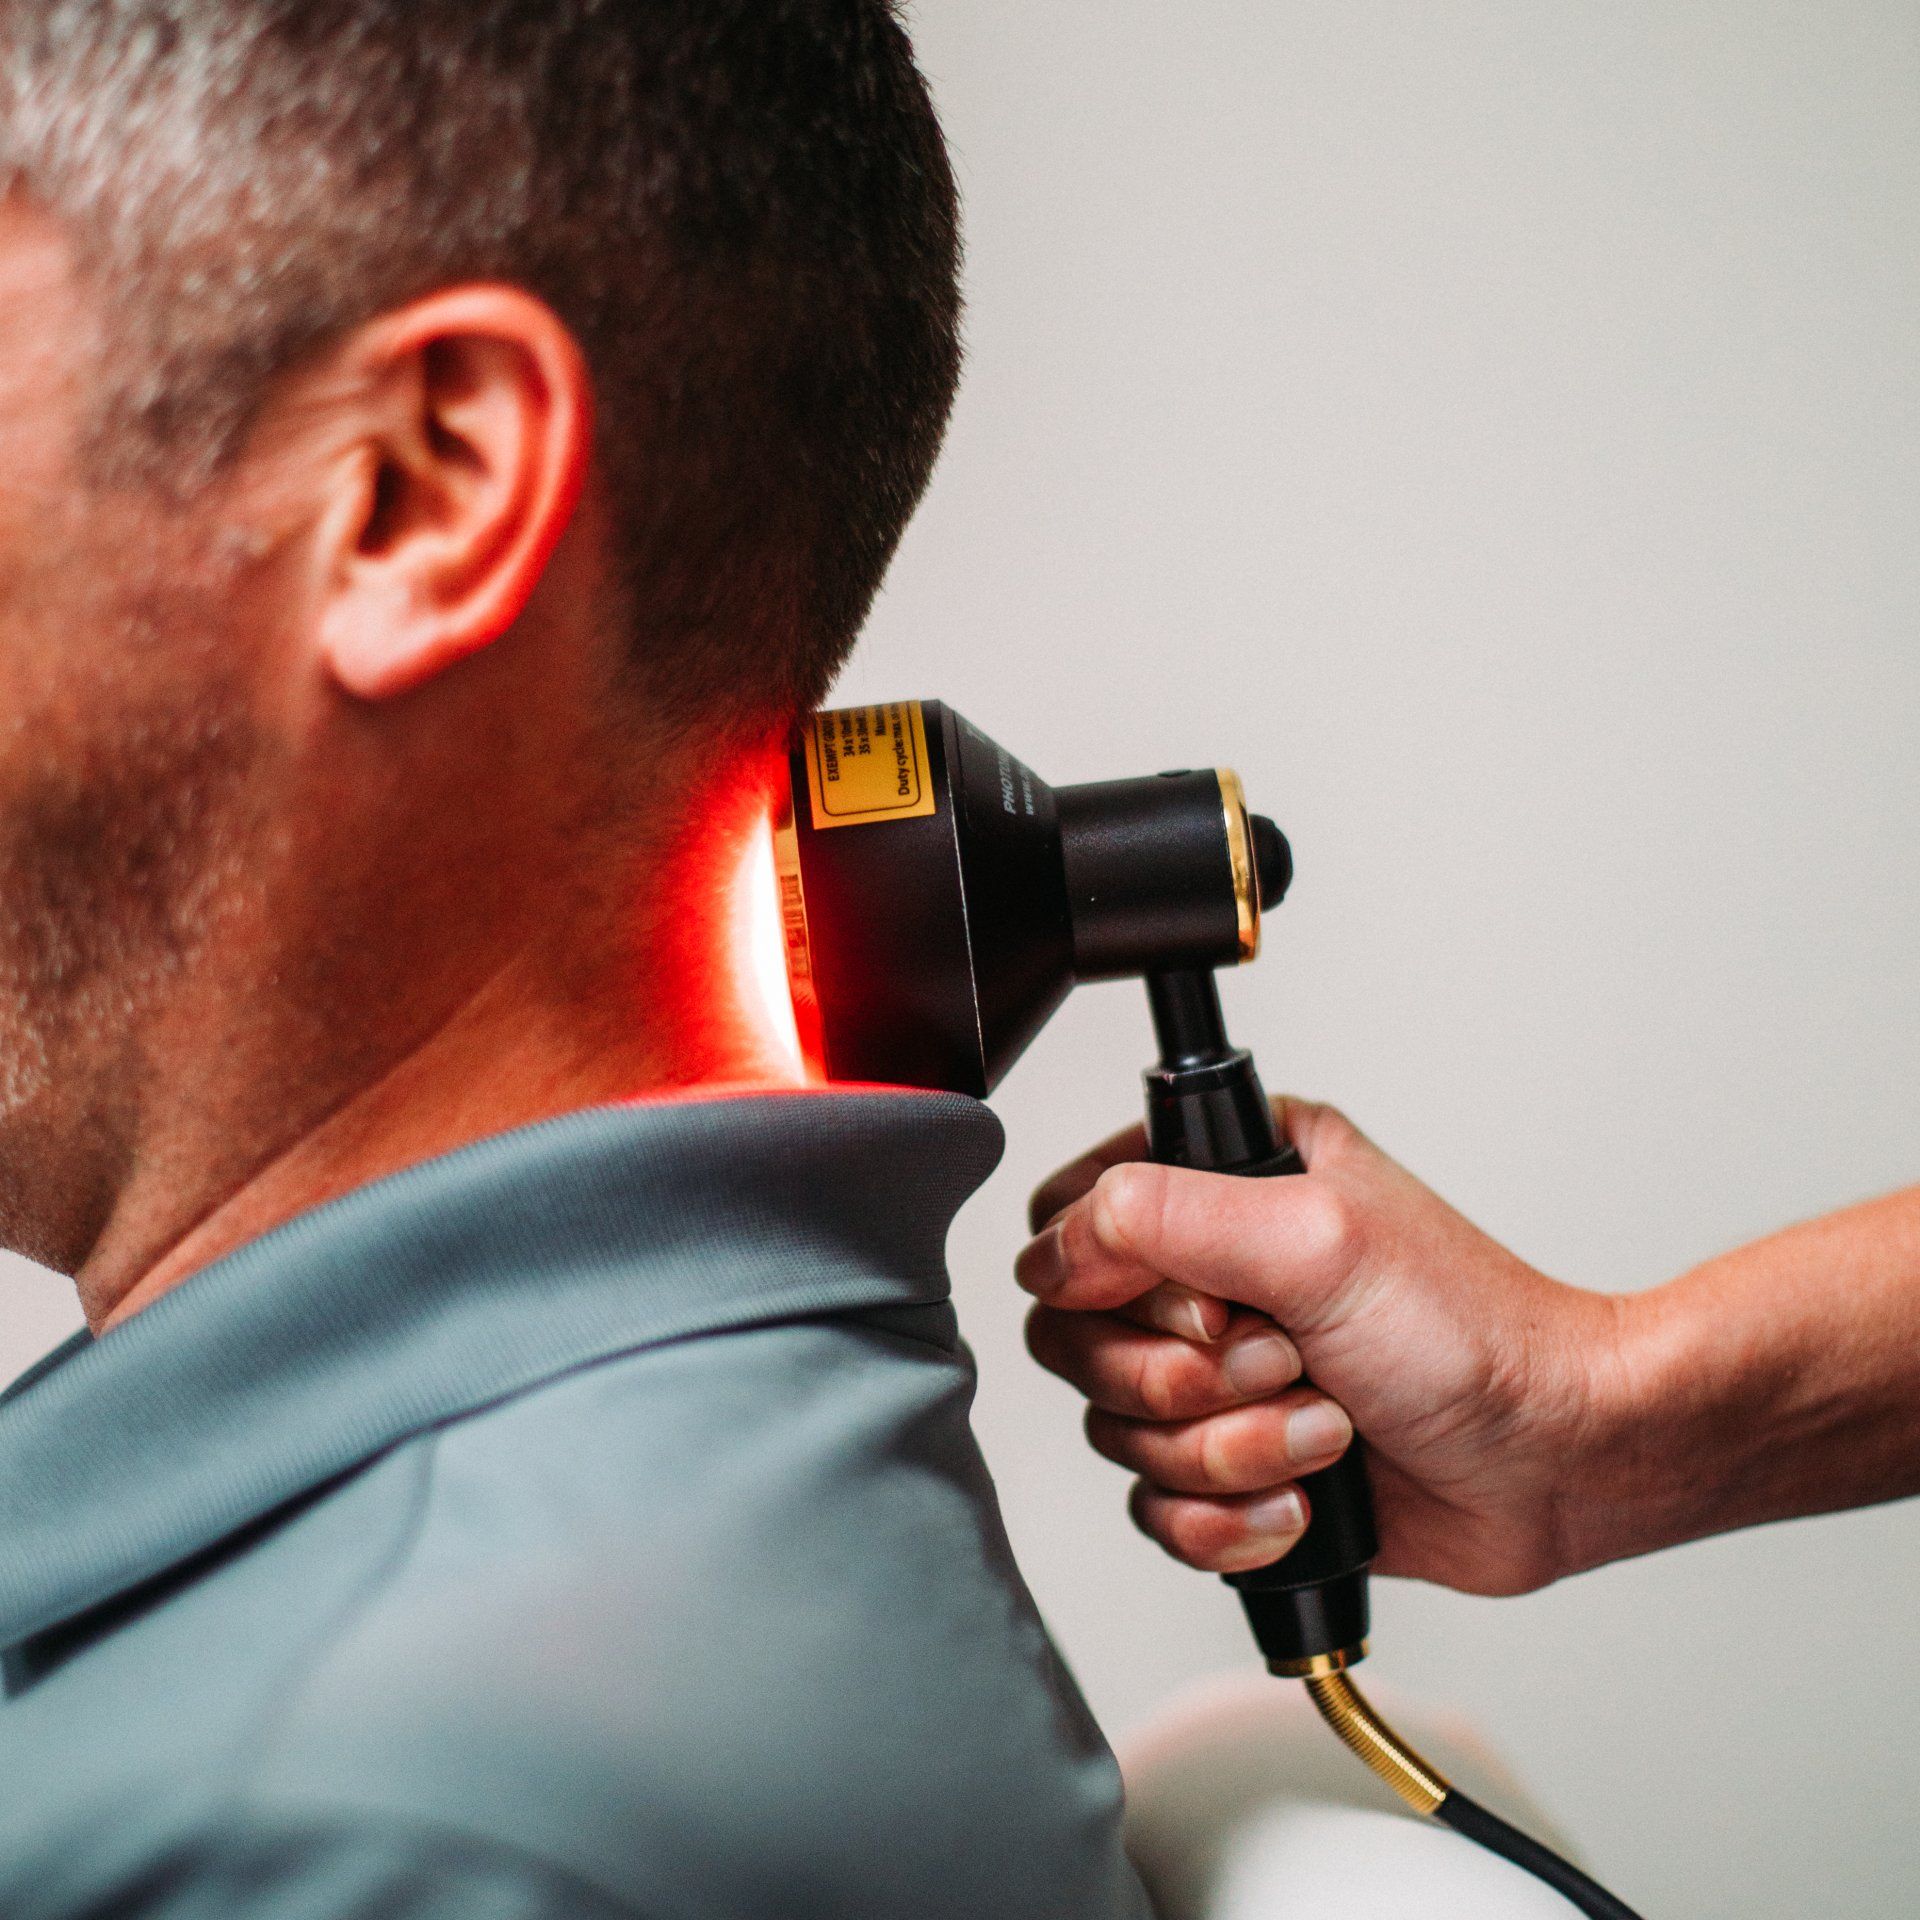 Man gets arthritis laser treatment on neck